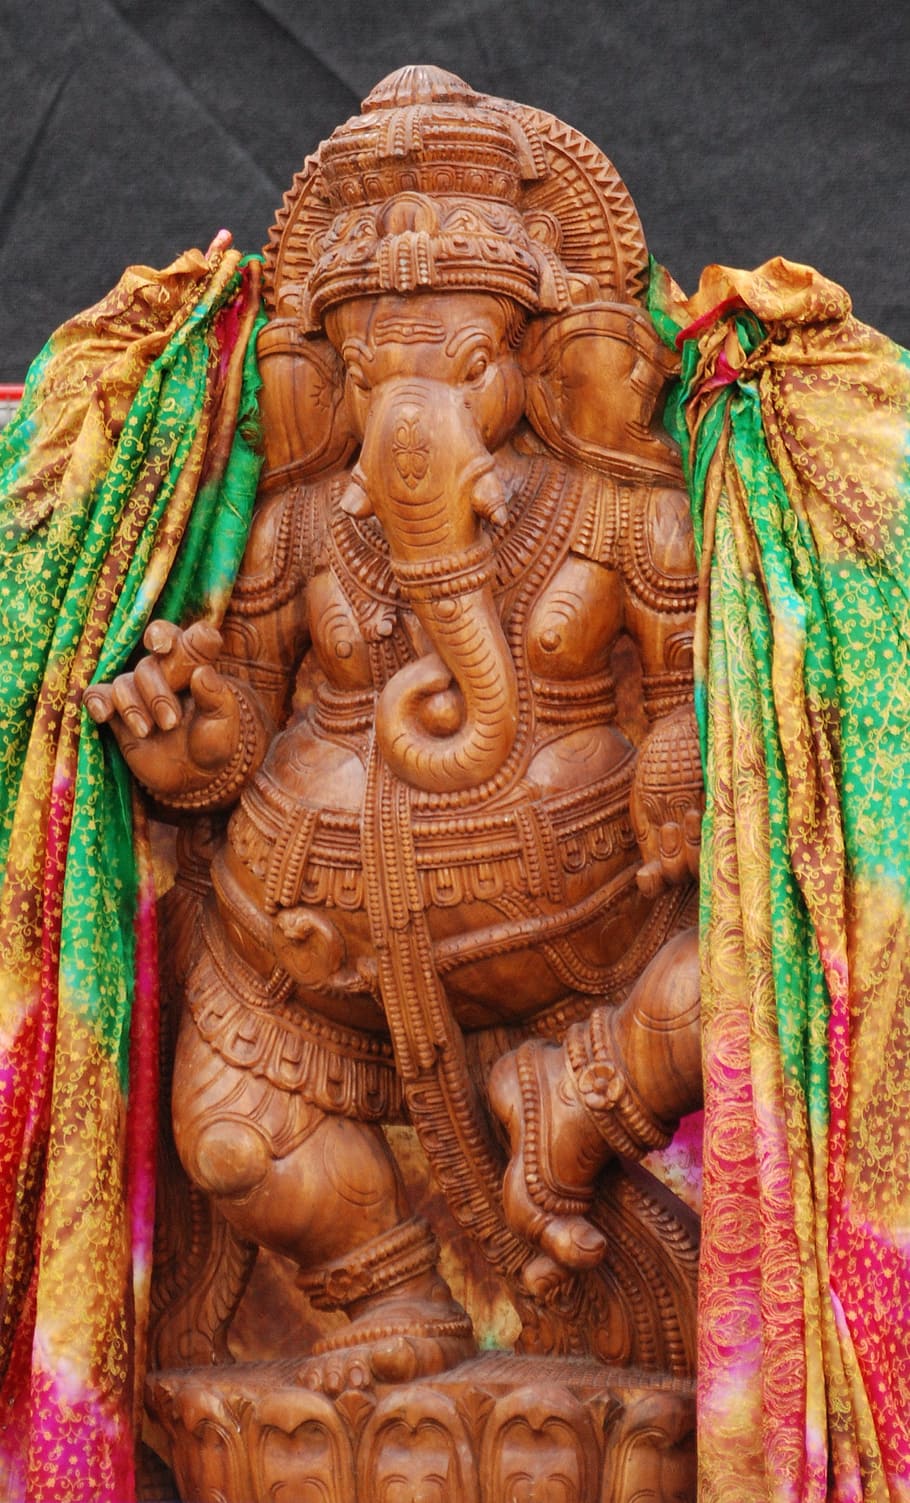 lord ganesha statue, ganesha, elephant, hinduism, god, asian, indian, religion, art and craft, close-up